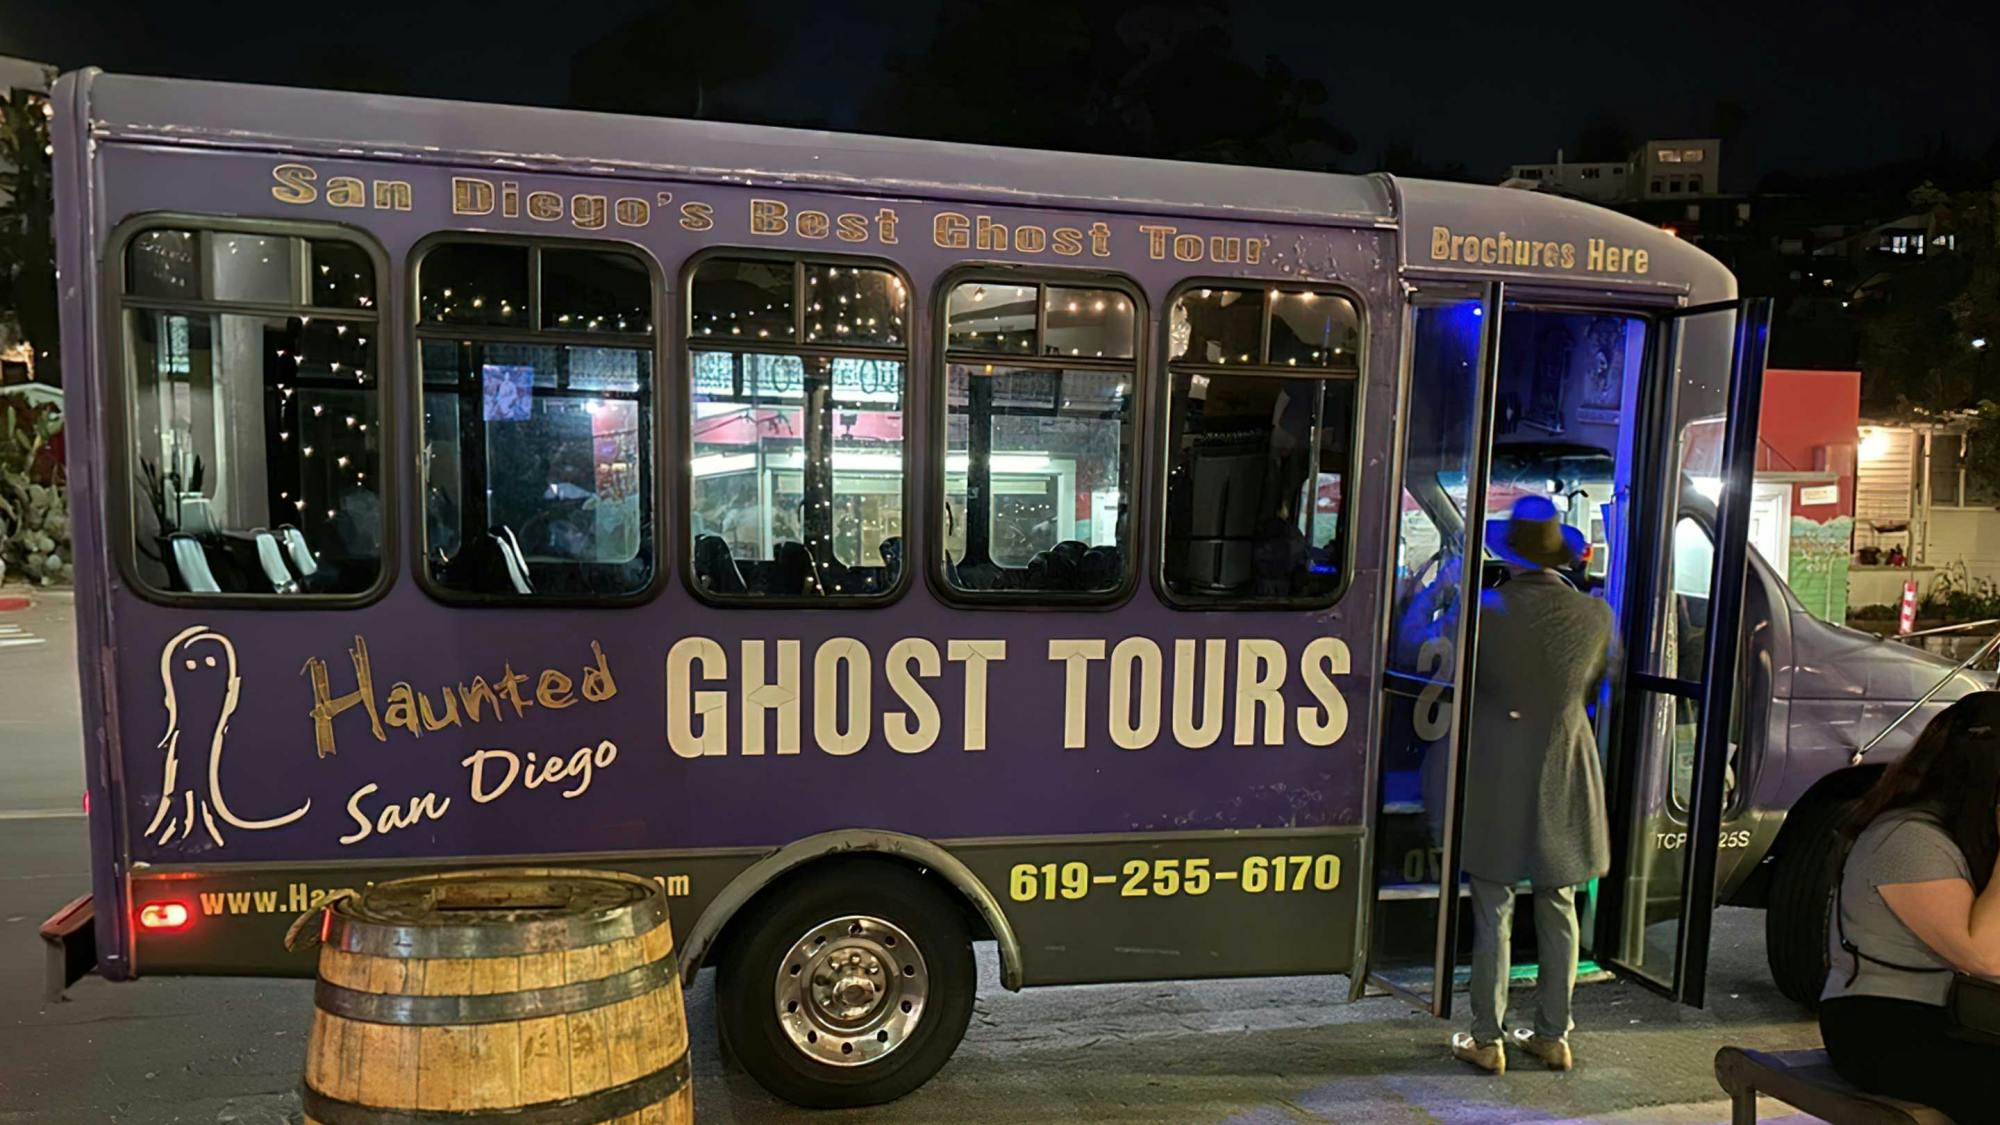 Spooktocht door San Diego per bus